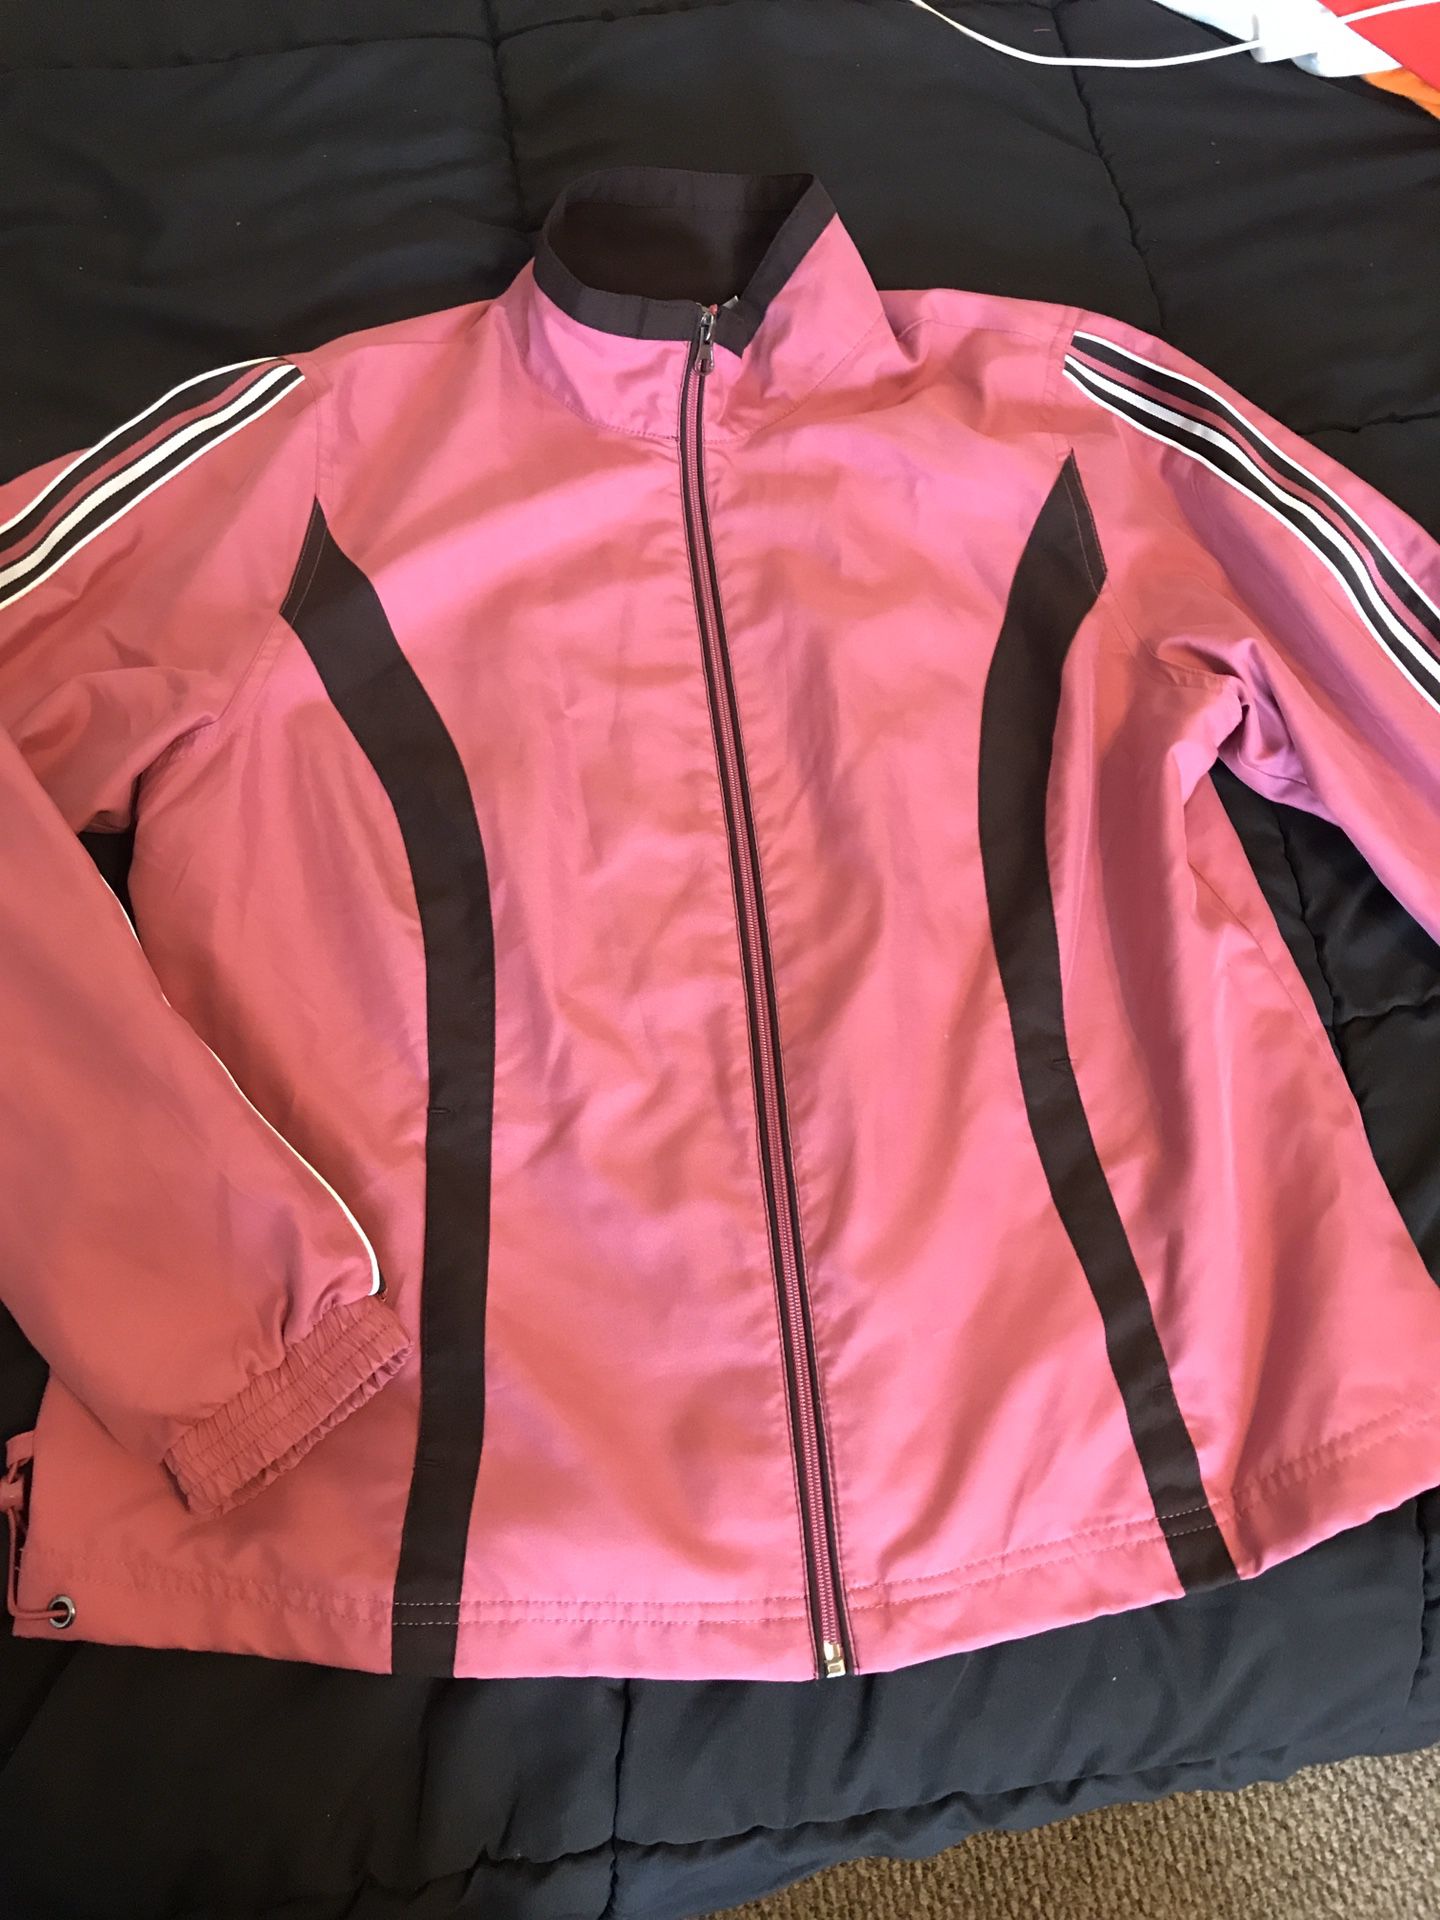 Ladies pink black athletic lightweight jacket pm